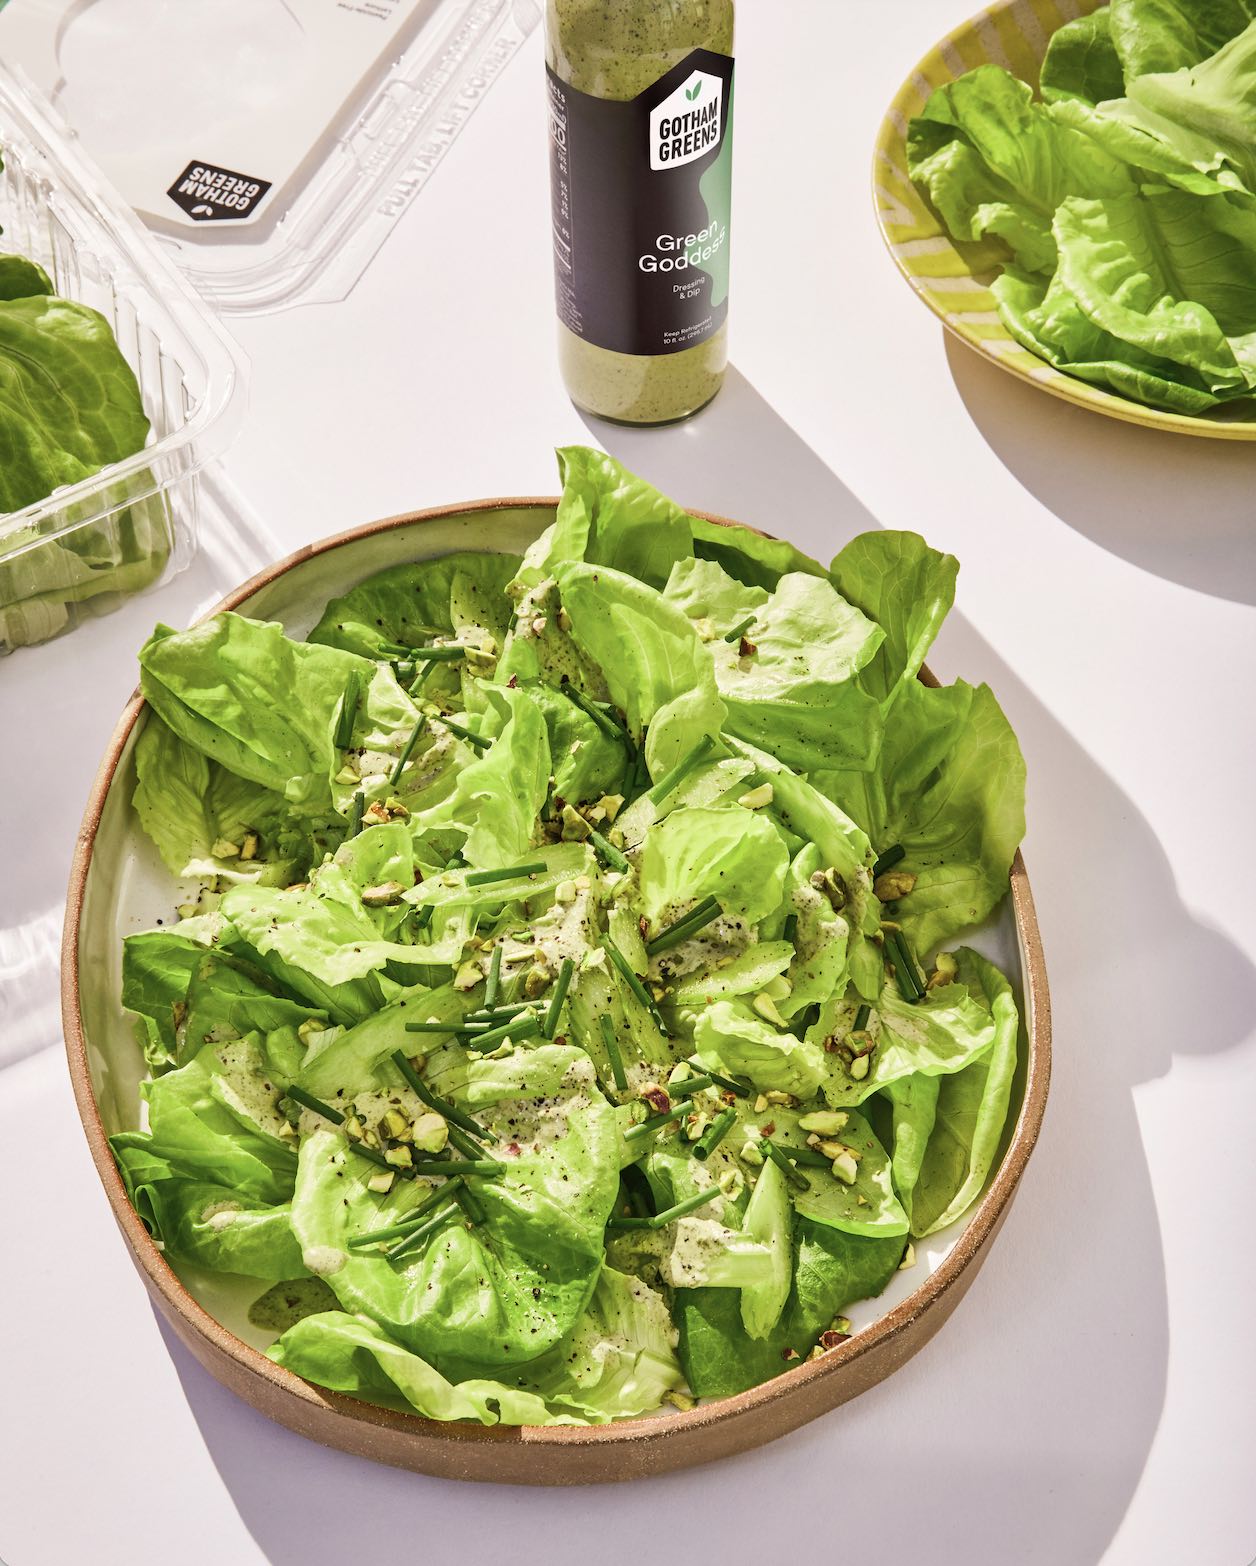 Gotham Greens launches new salad kit line